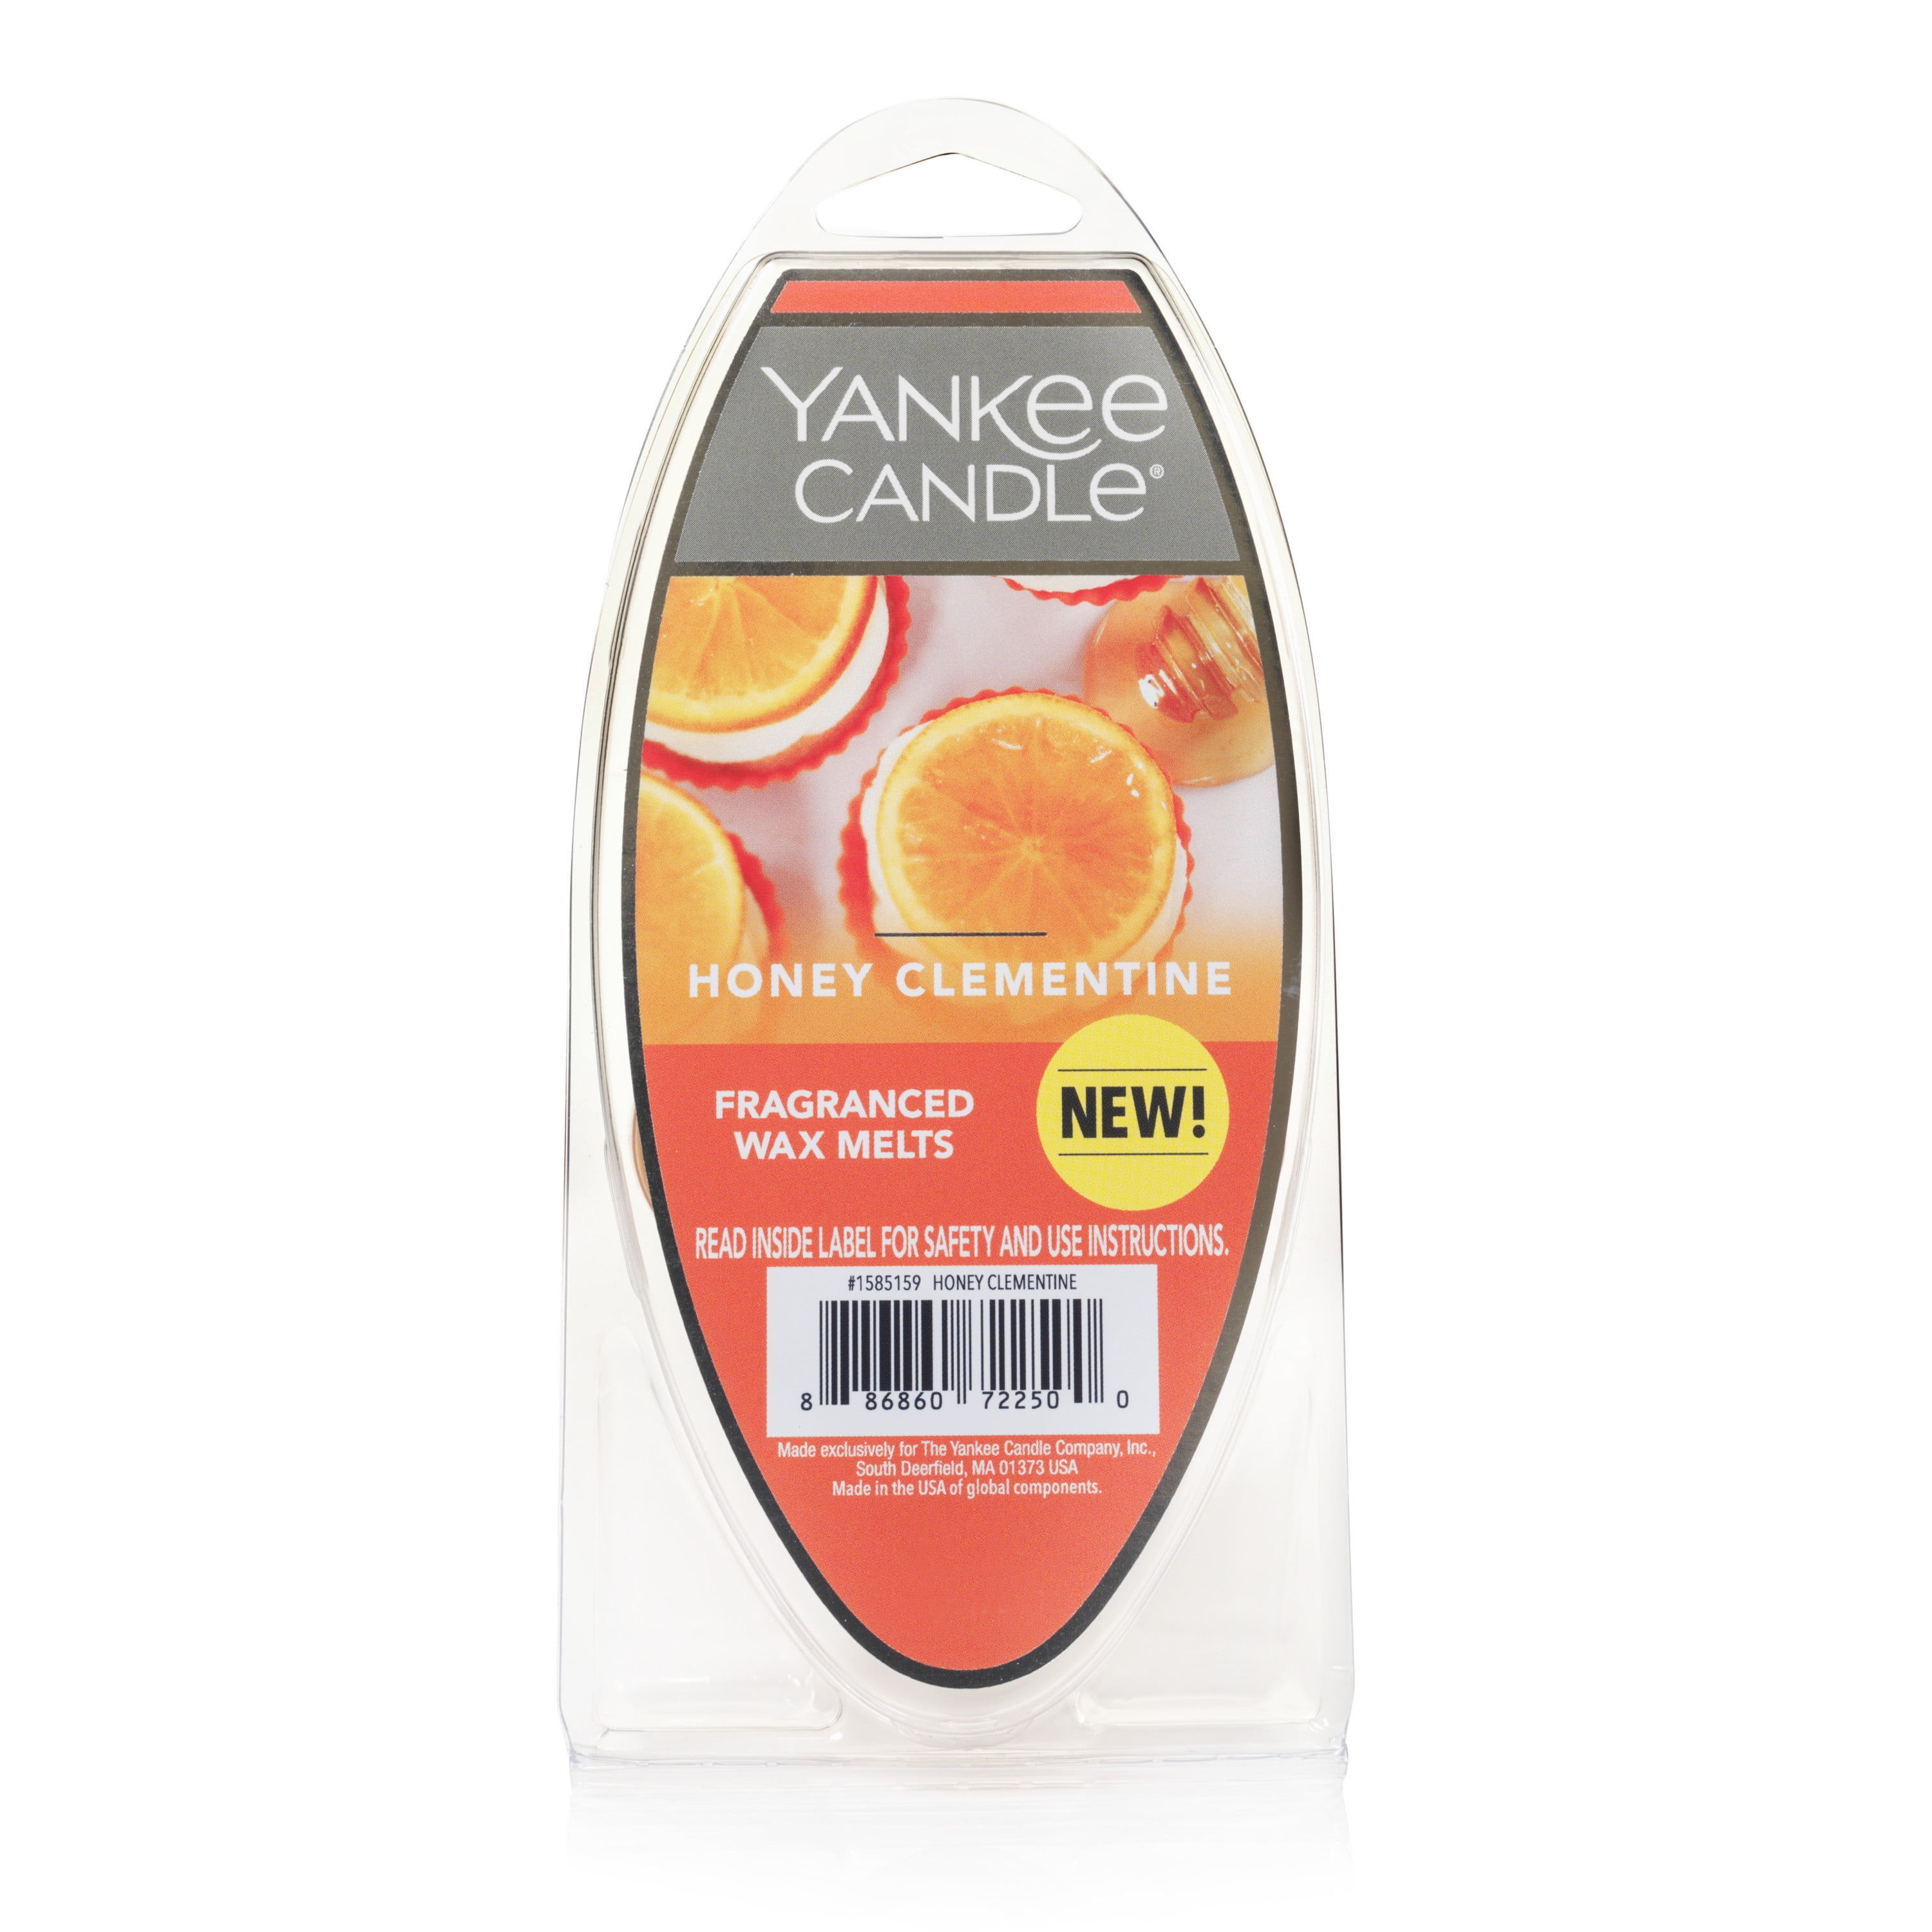 Yankee Candle Wax Melts Honey Clementine Walmart Inventory Checker Brickseek